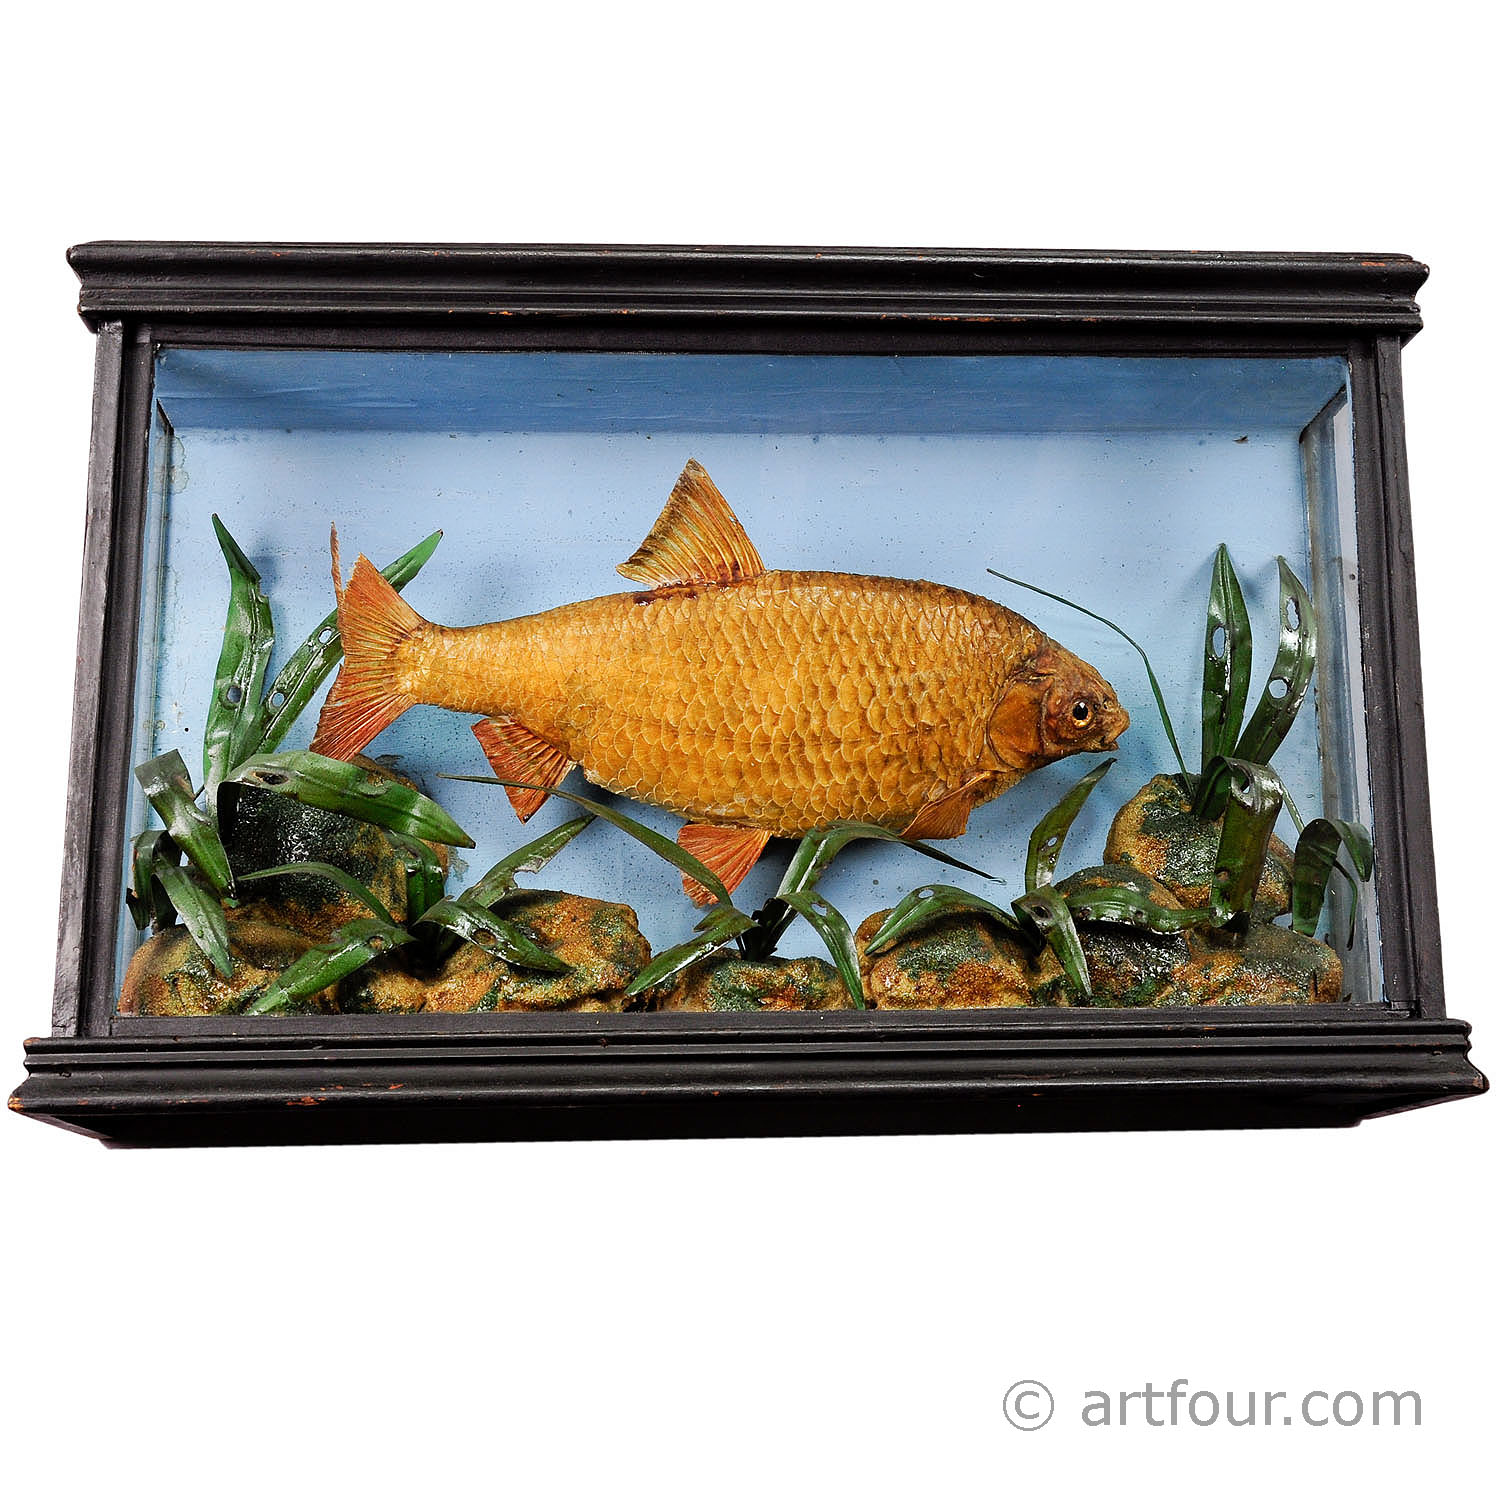 Antique Fish Taxidermy Glass Showcase with Bream ca. 1900